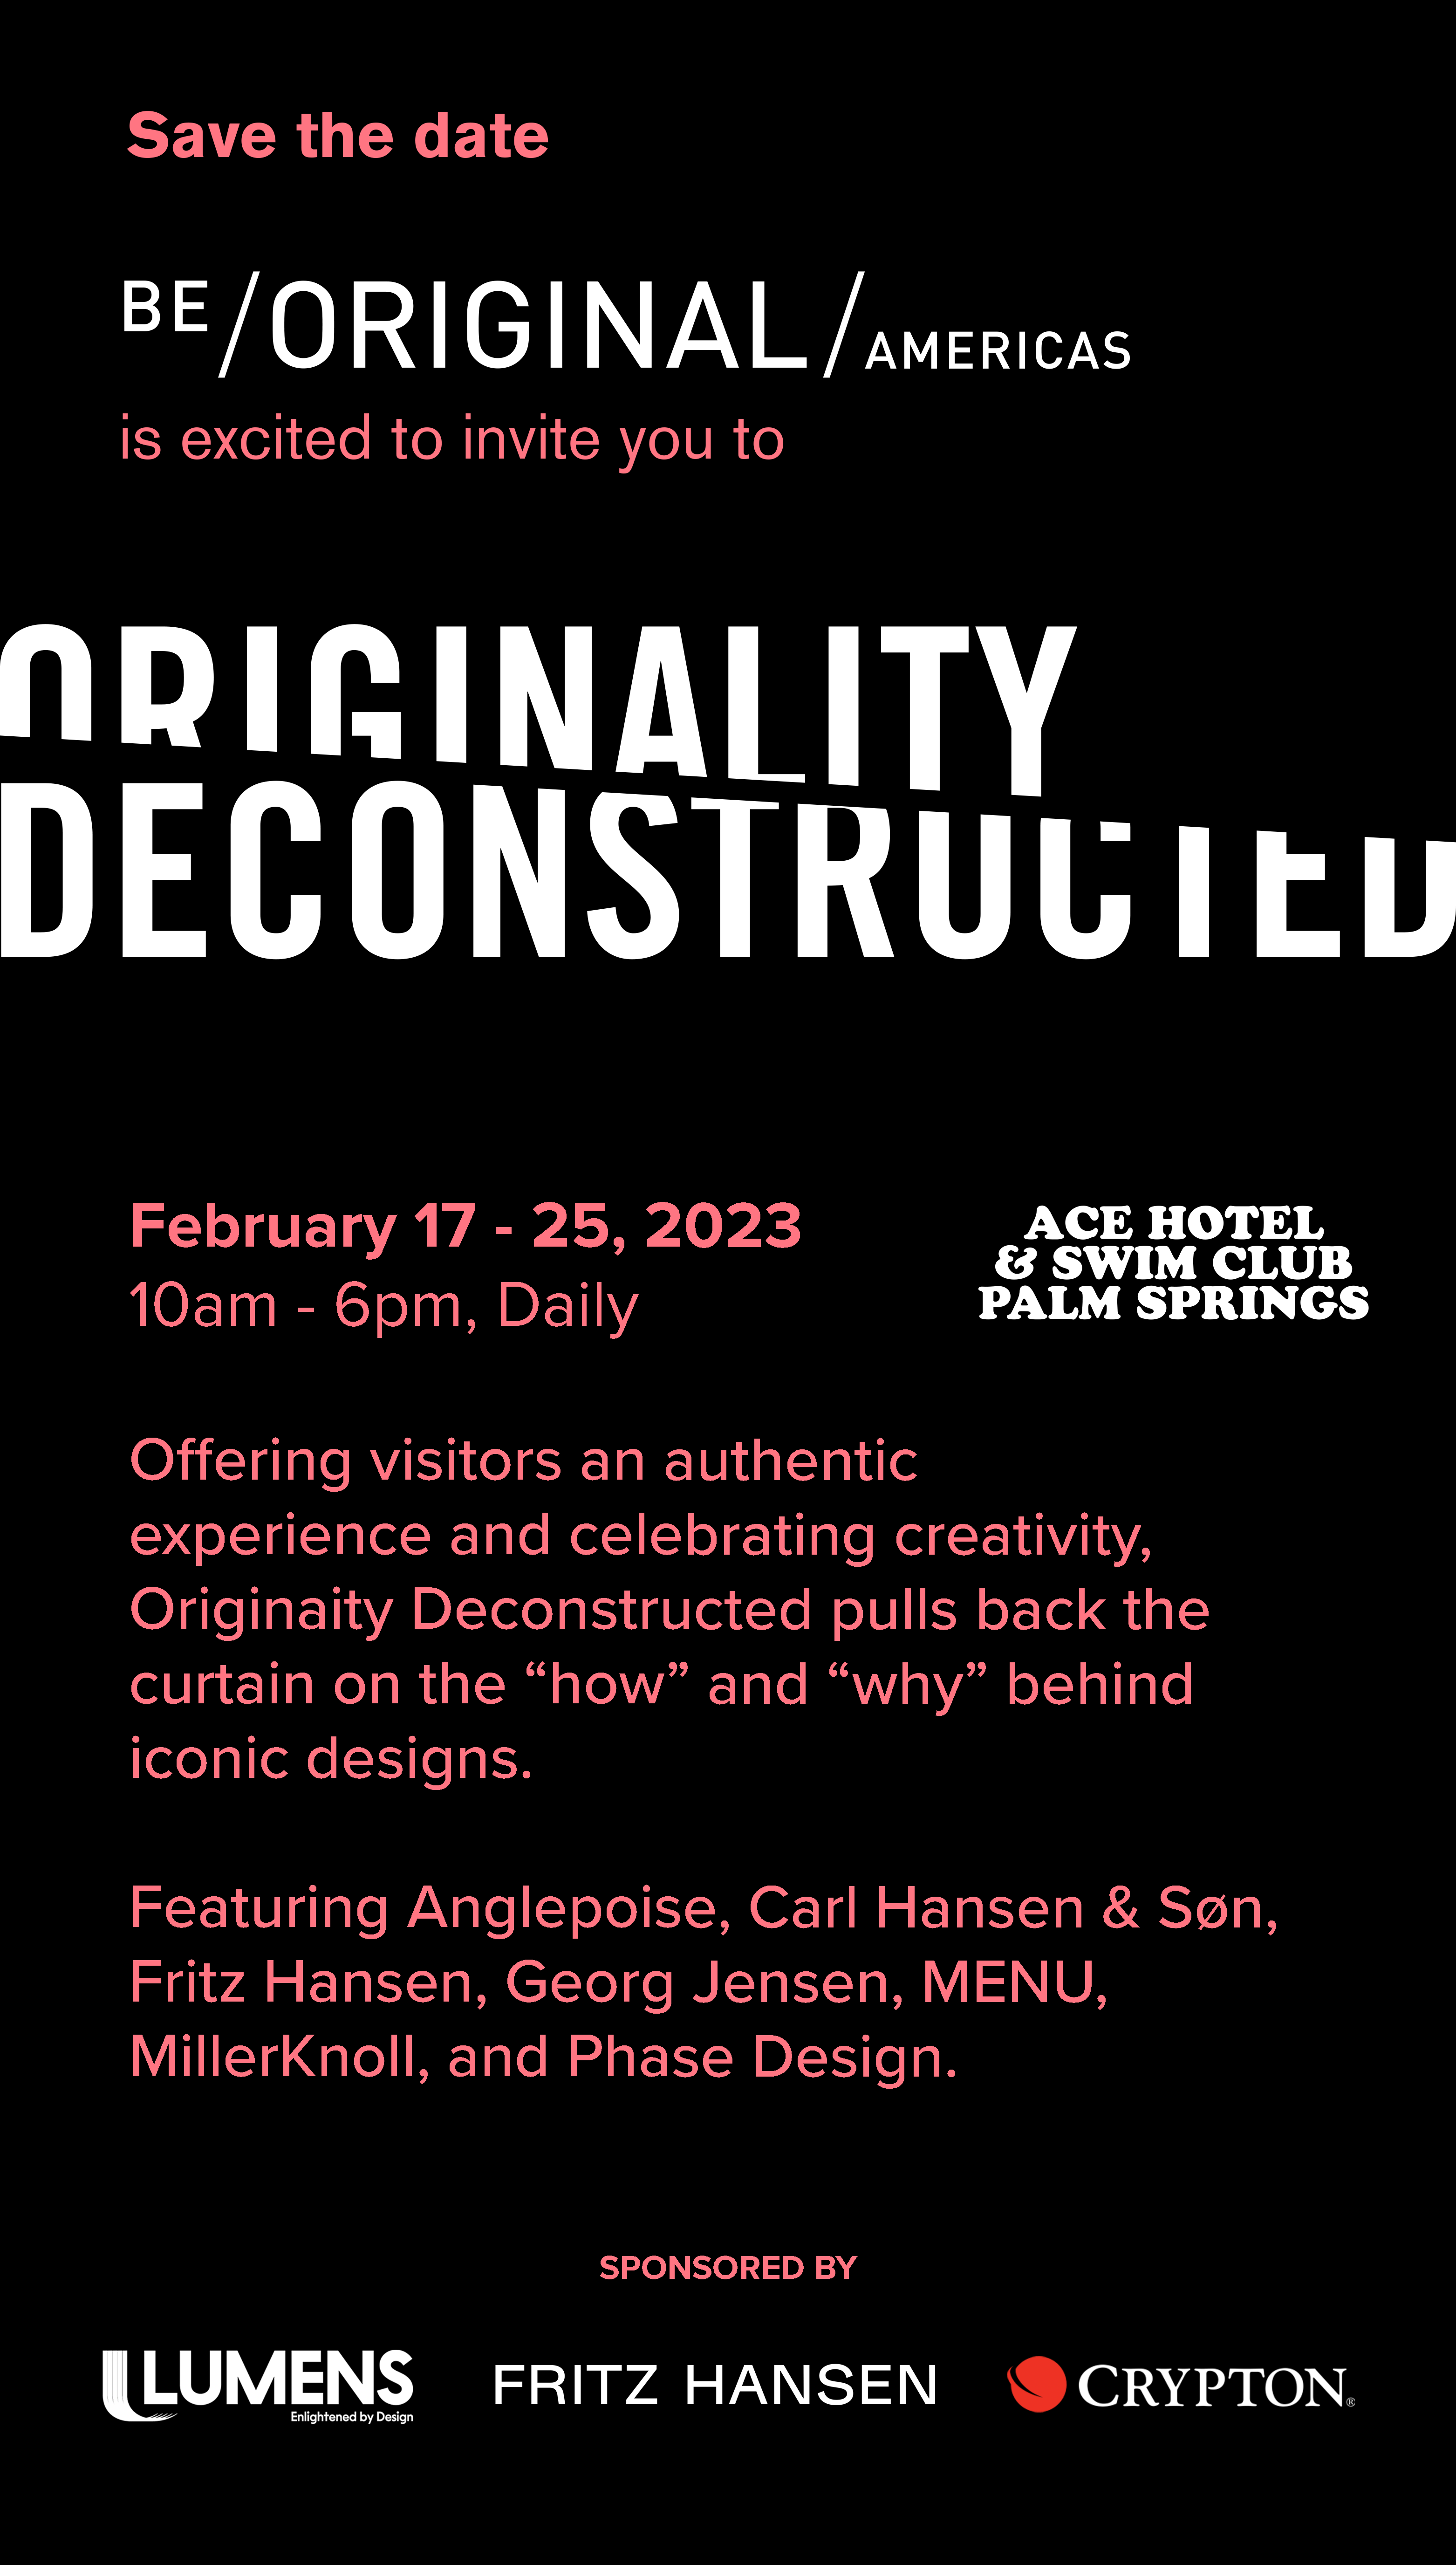 Be Original Americas: Originality Deconstructed Exhibition promo